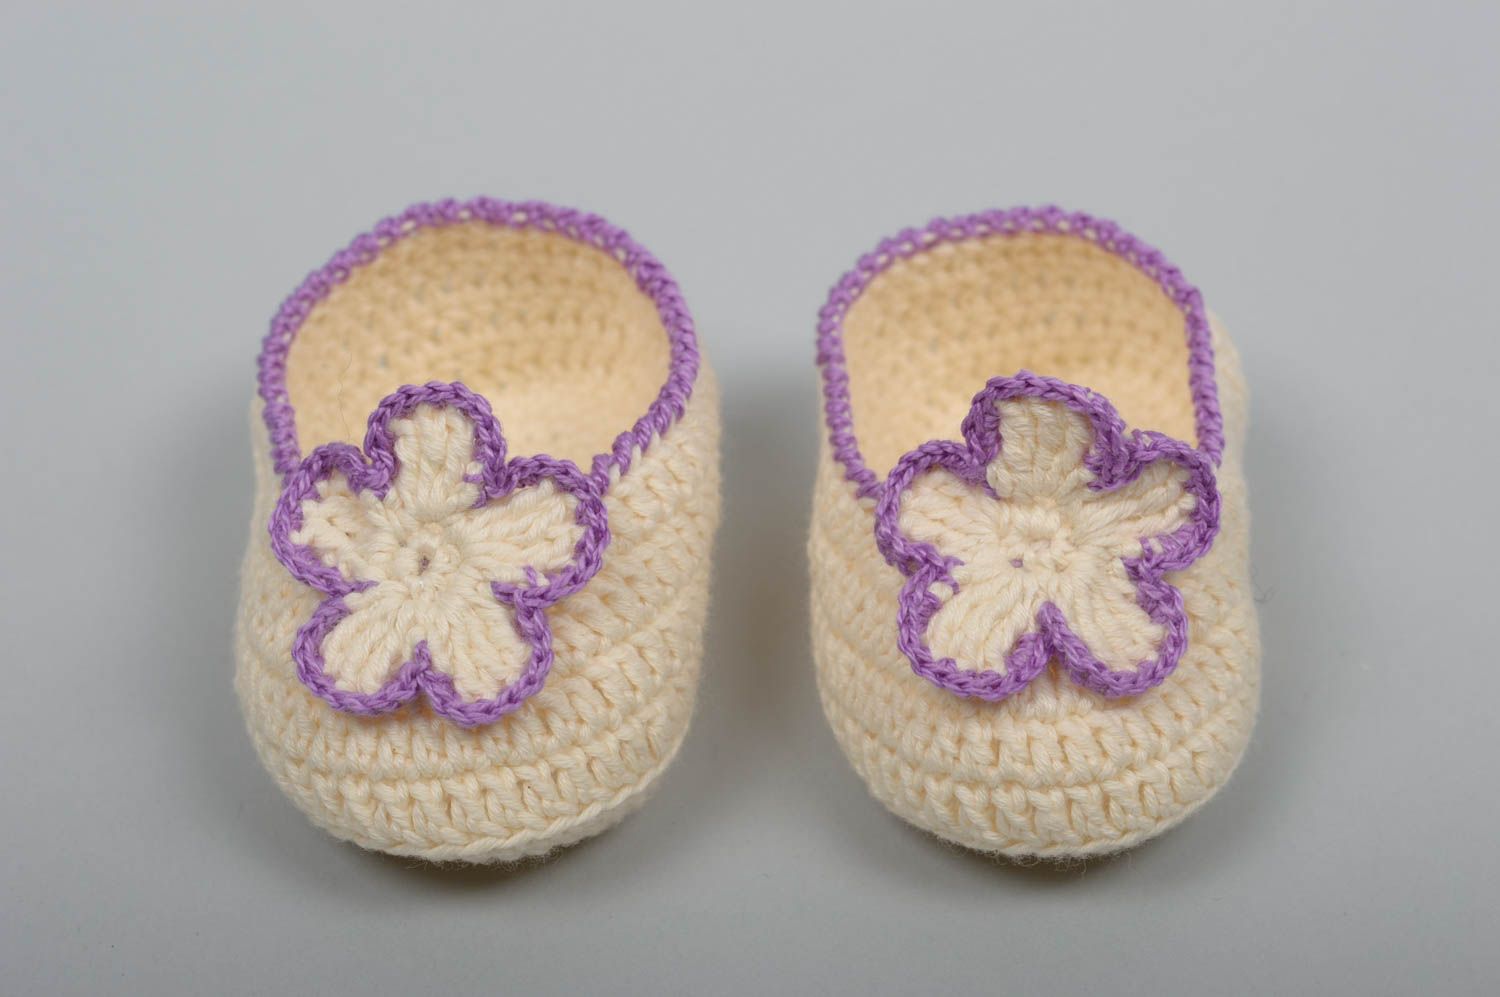 Beautiful handmade crochet baby booties fashion baby accessories crochet ideas photo 1